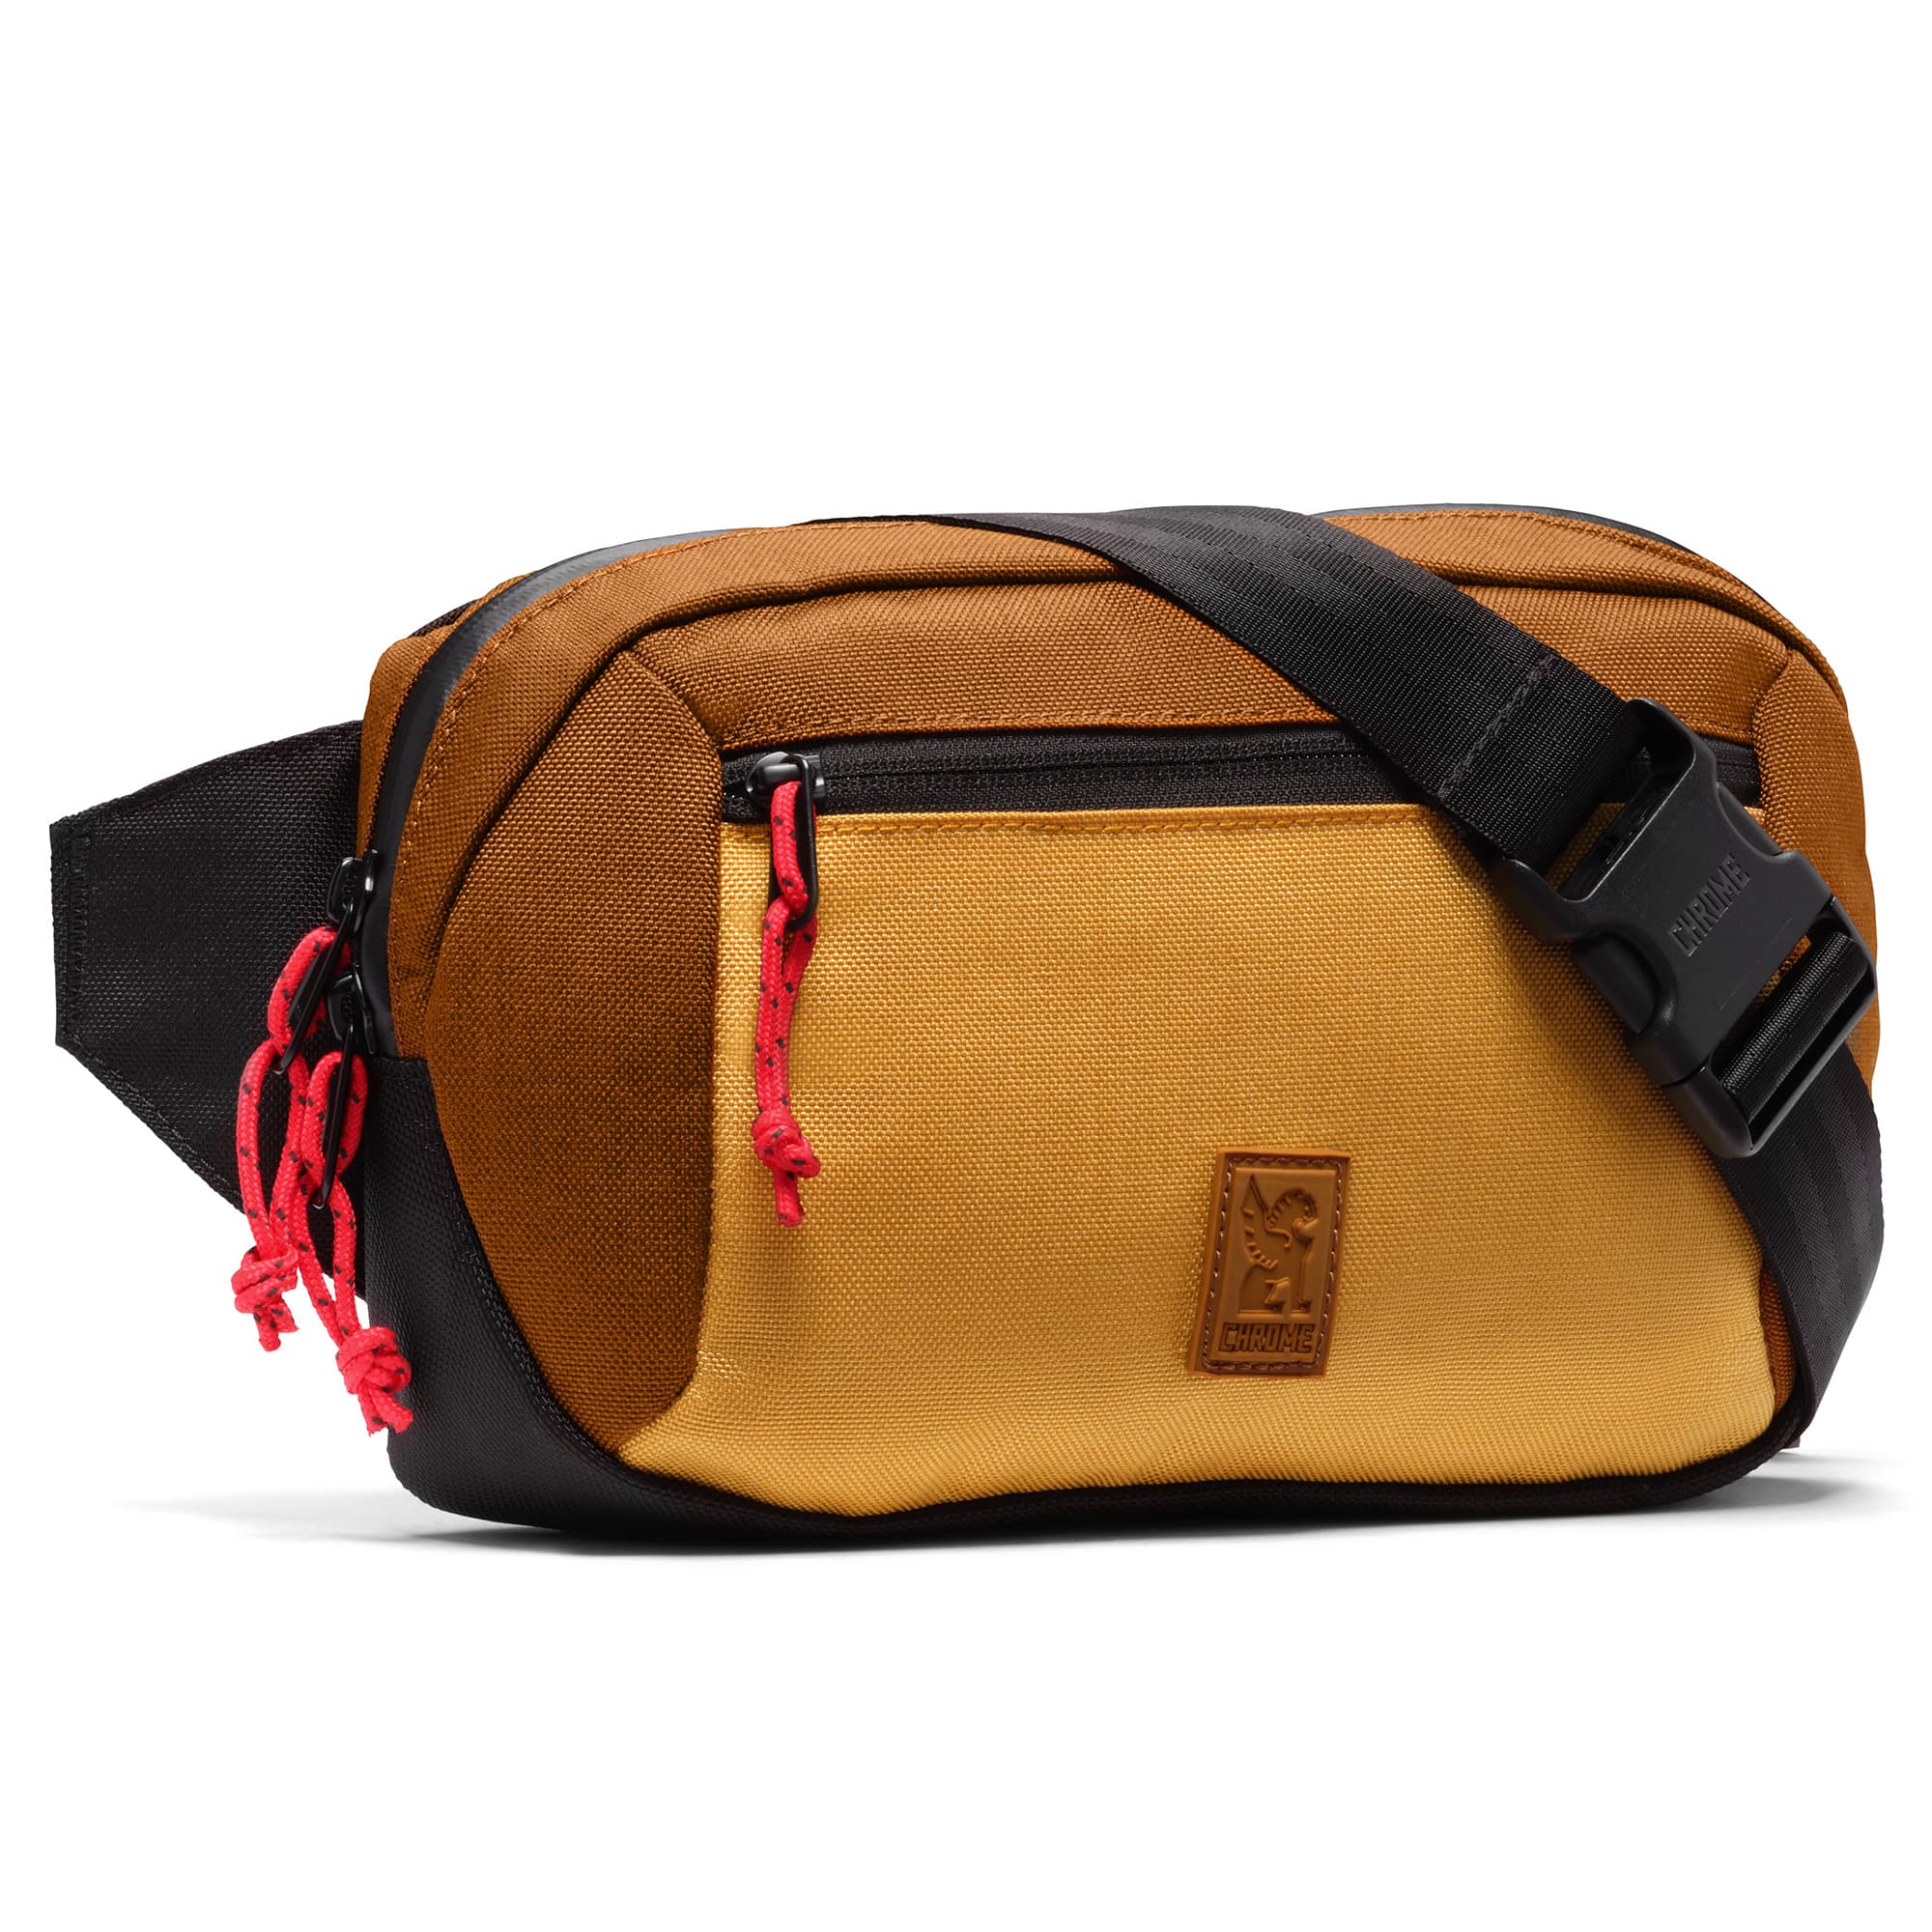 Ziptop Waistpack sling in amber tritone #color_amber tritone